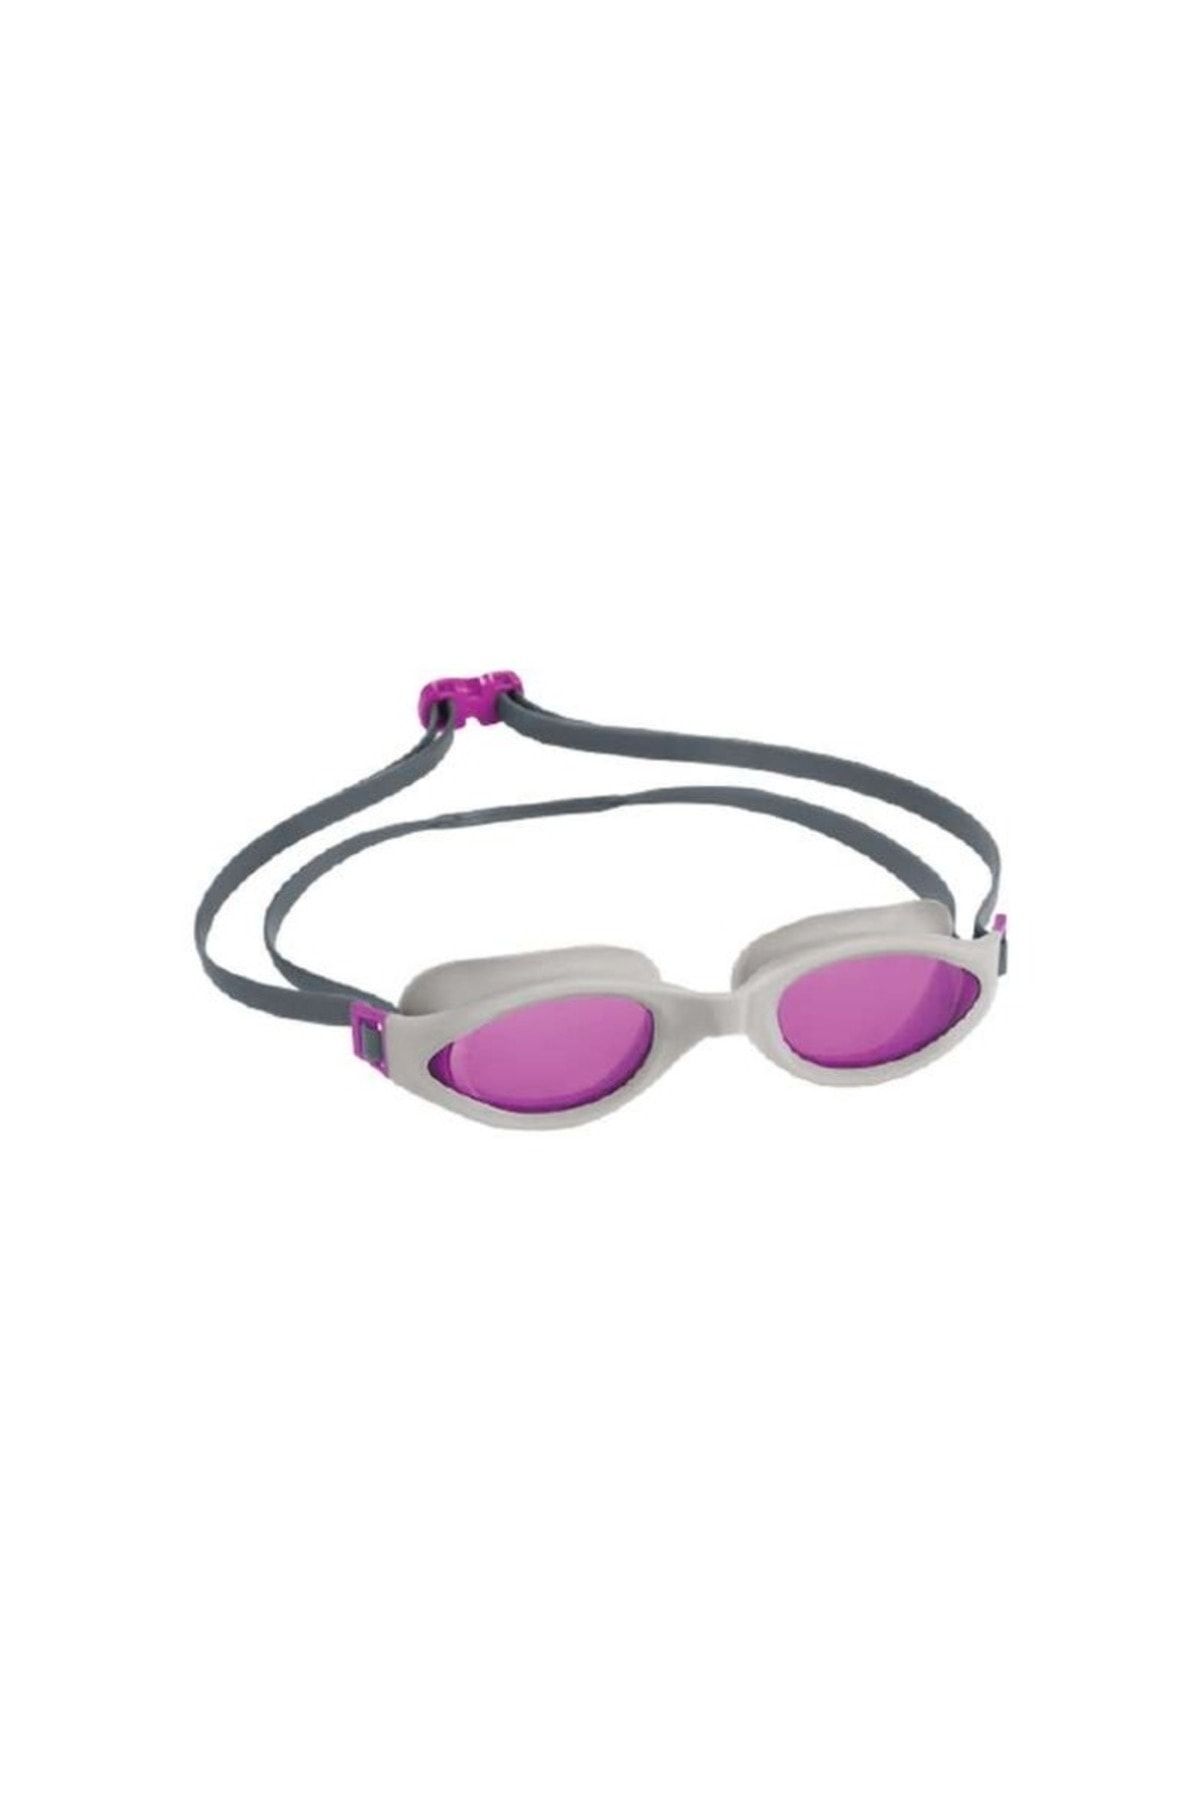 Efna Store Yetişkin Yüzücü Gözlüğü 14 Uv Korumalı Ayarlanabilir Baş Lastikli